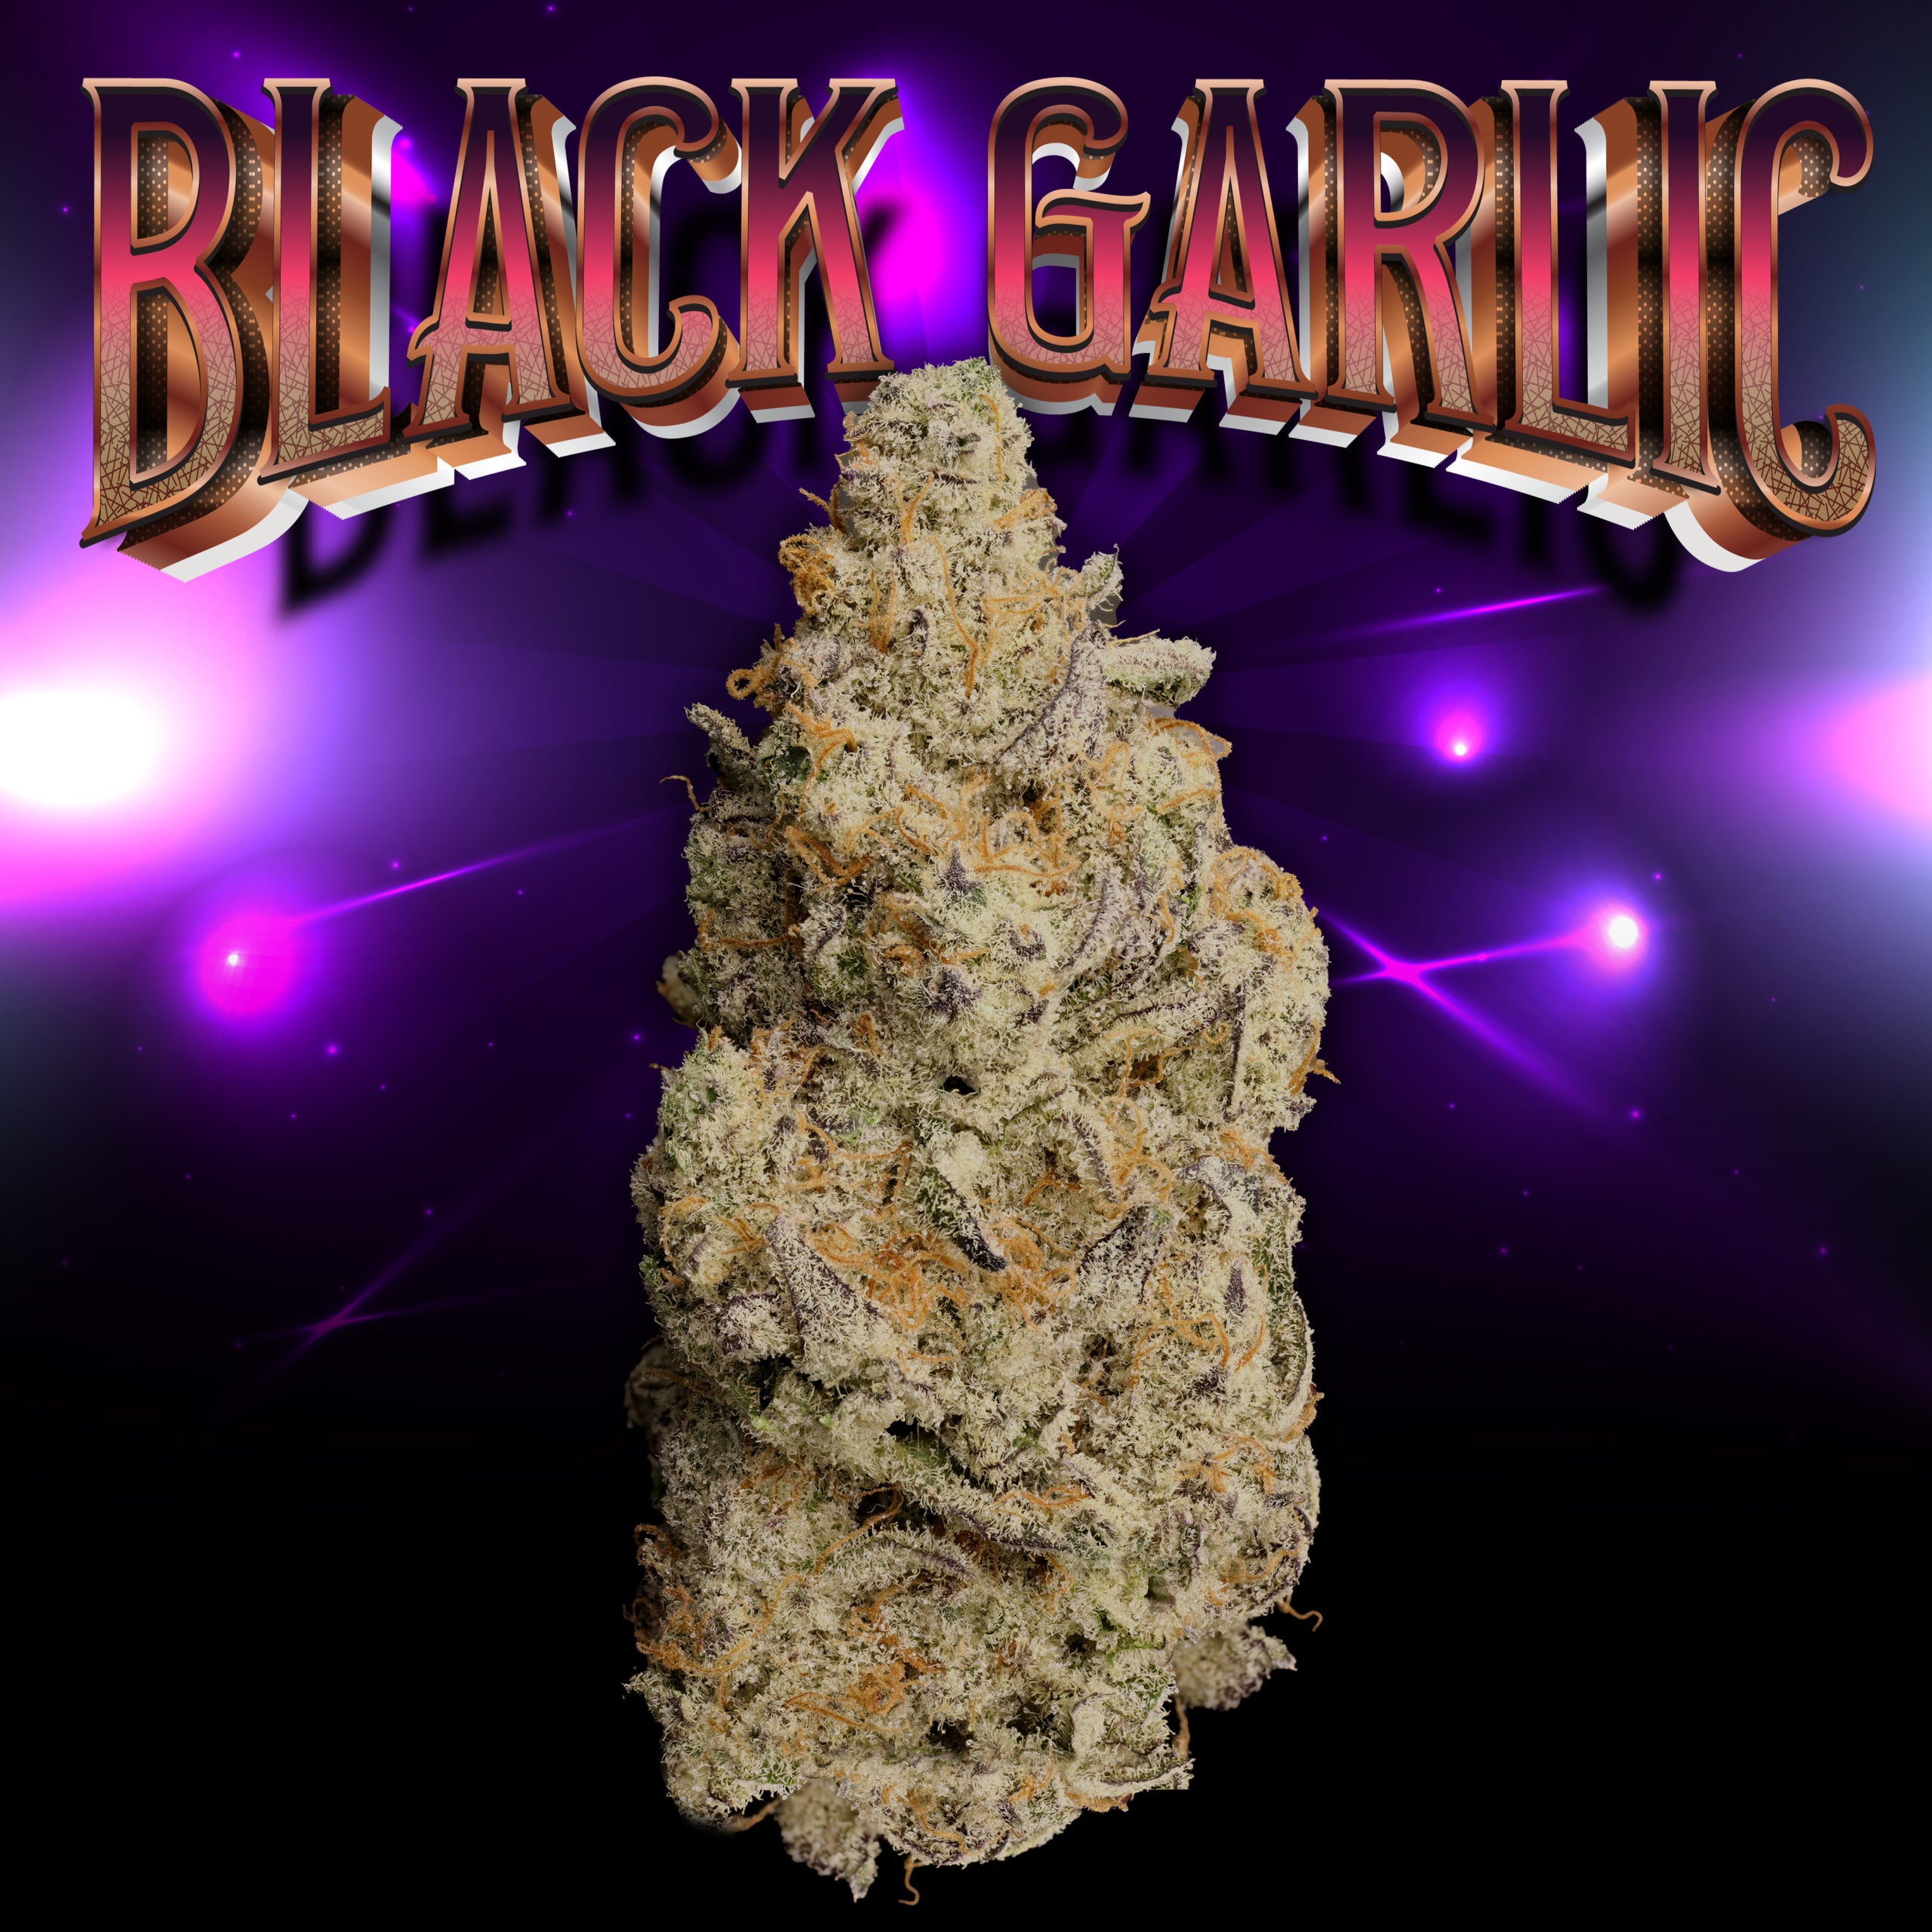 Black Garlic Thumbnail